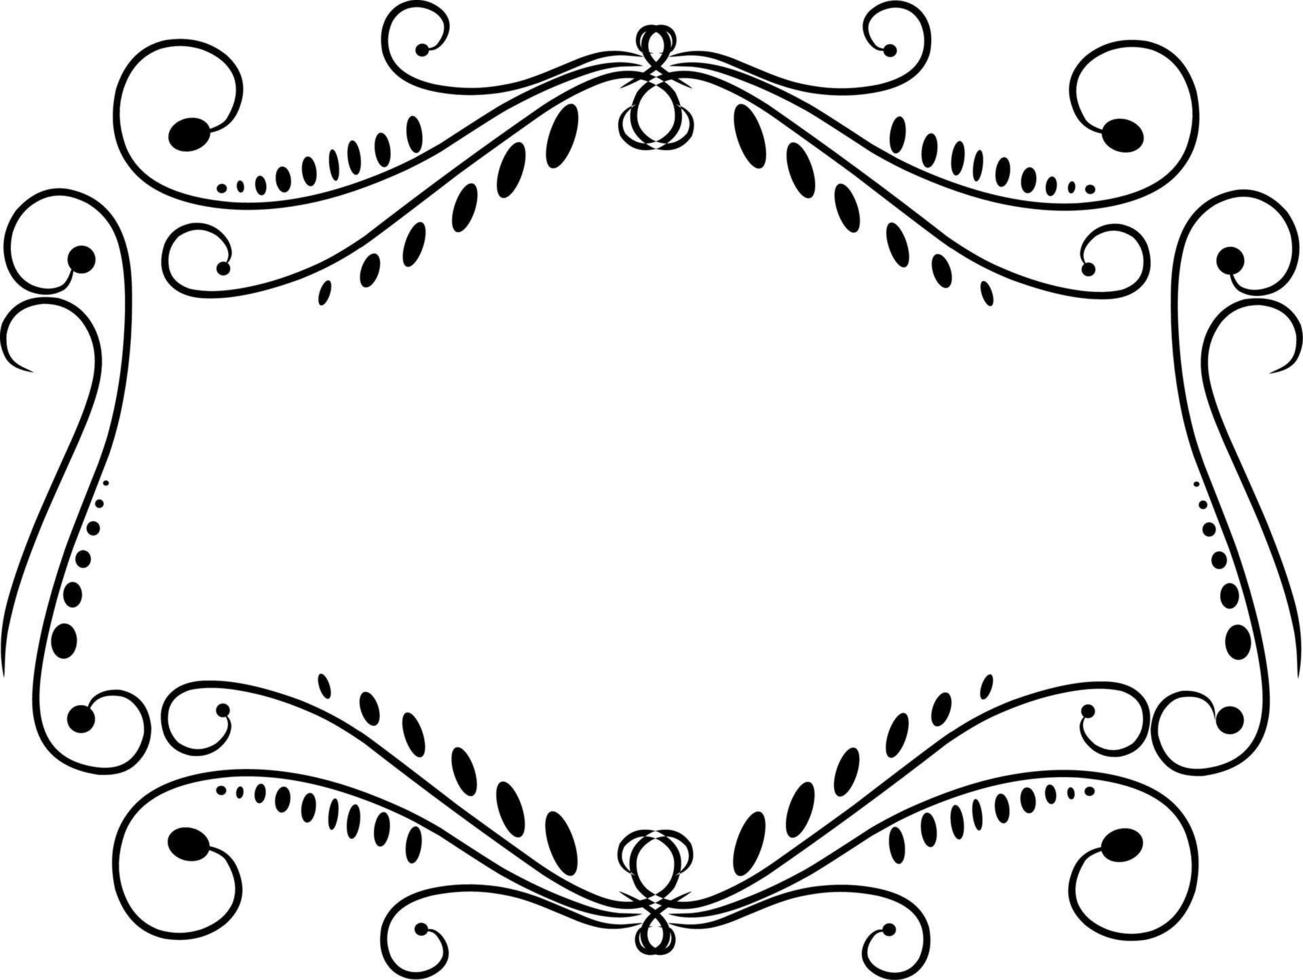 Hand drawn floral ornate frame vector